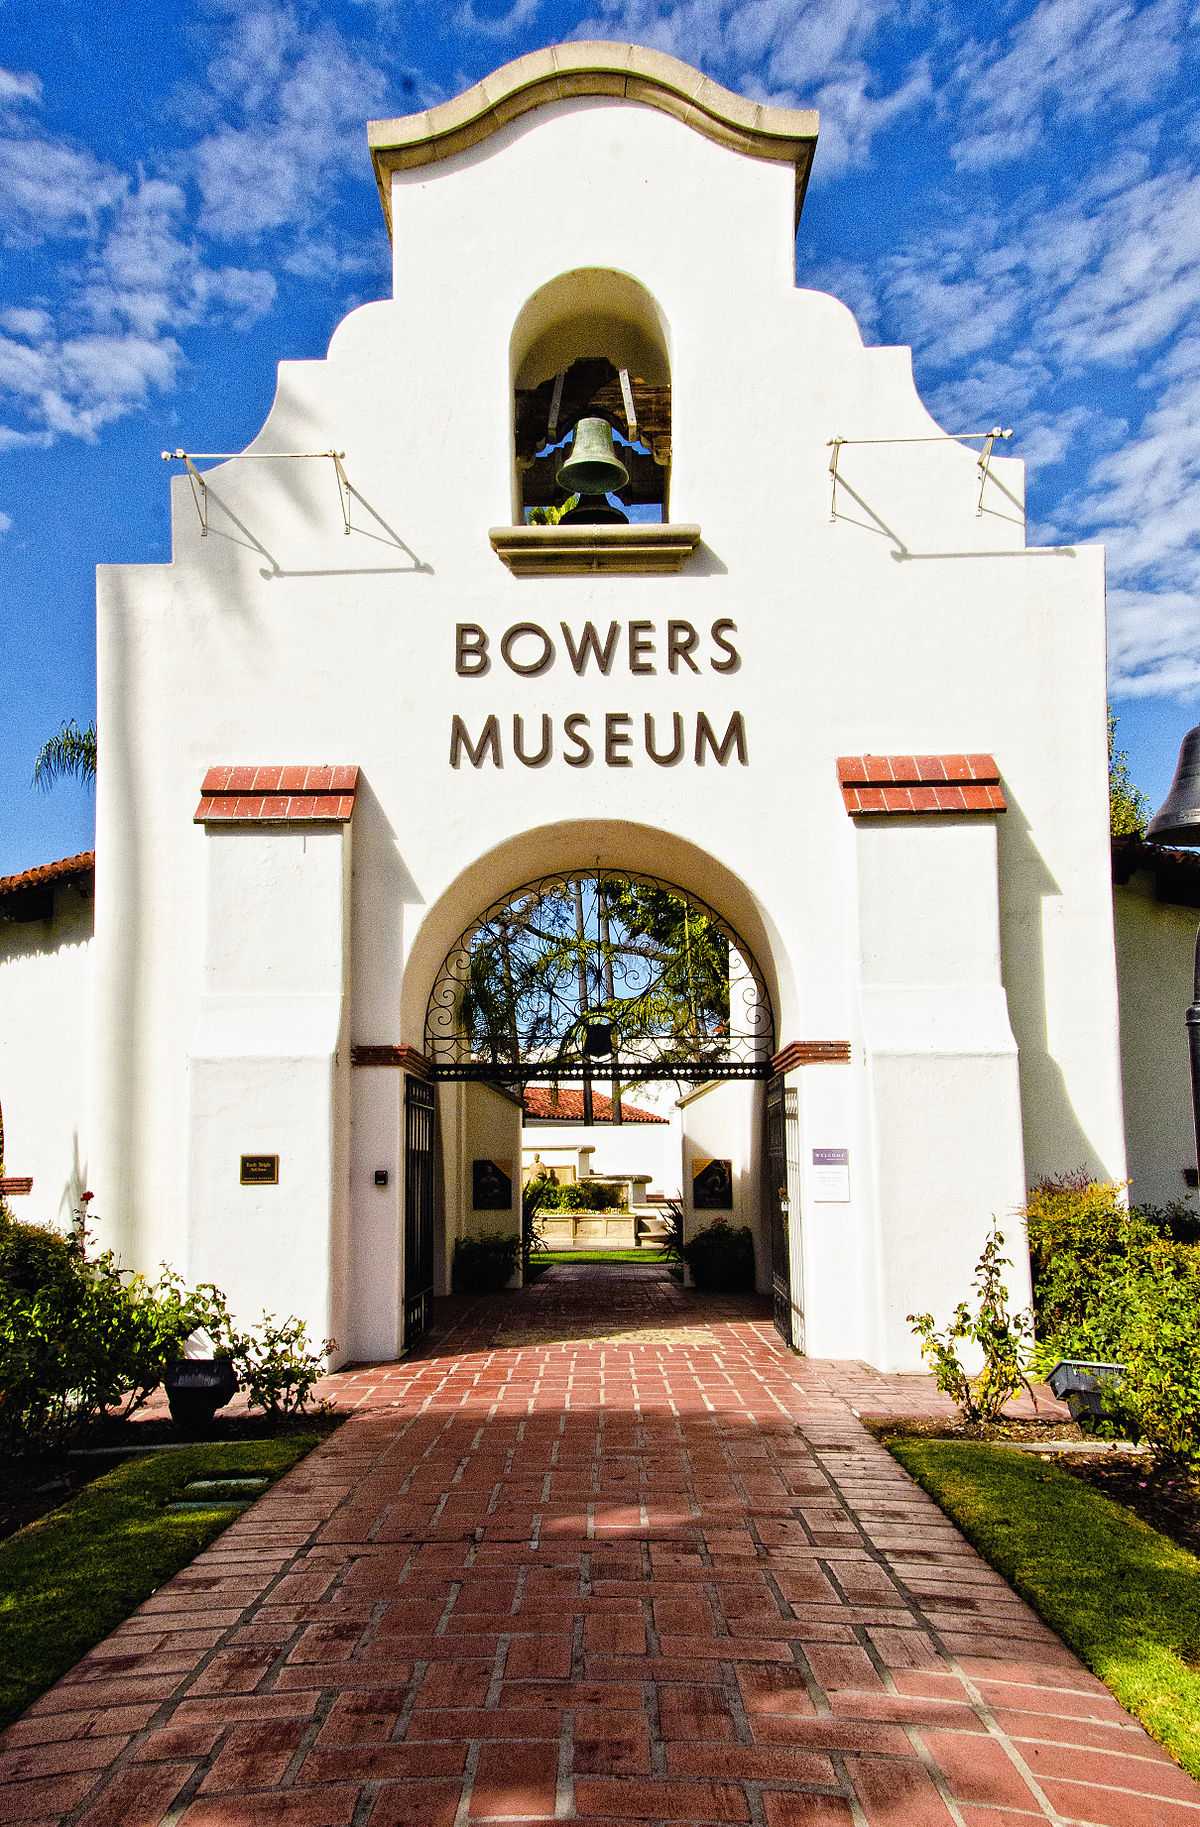 Bowers Museum details